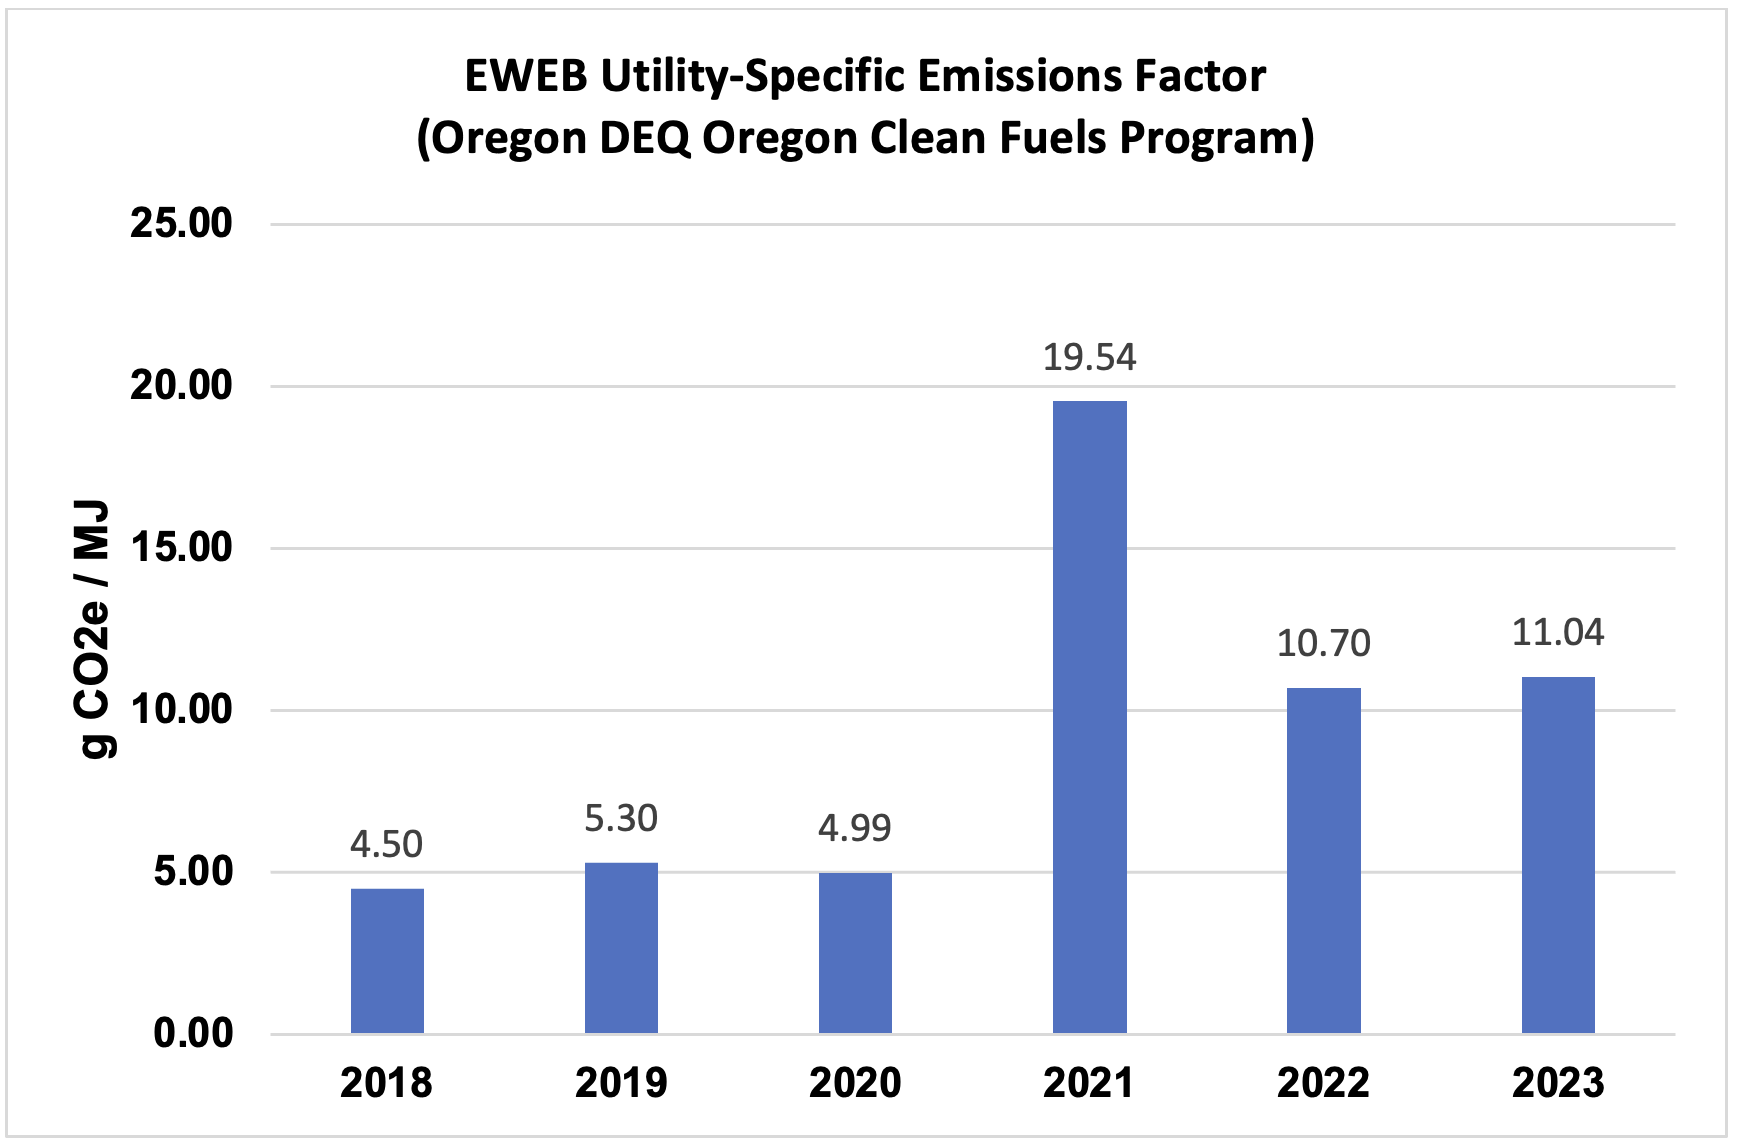 Graph of EWEB Utility-Specific Emissions Factors from Oregon DEQ Oregon Clean Fuels Program